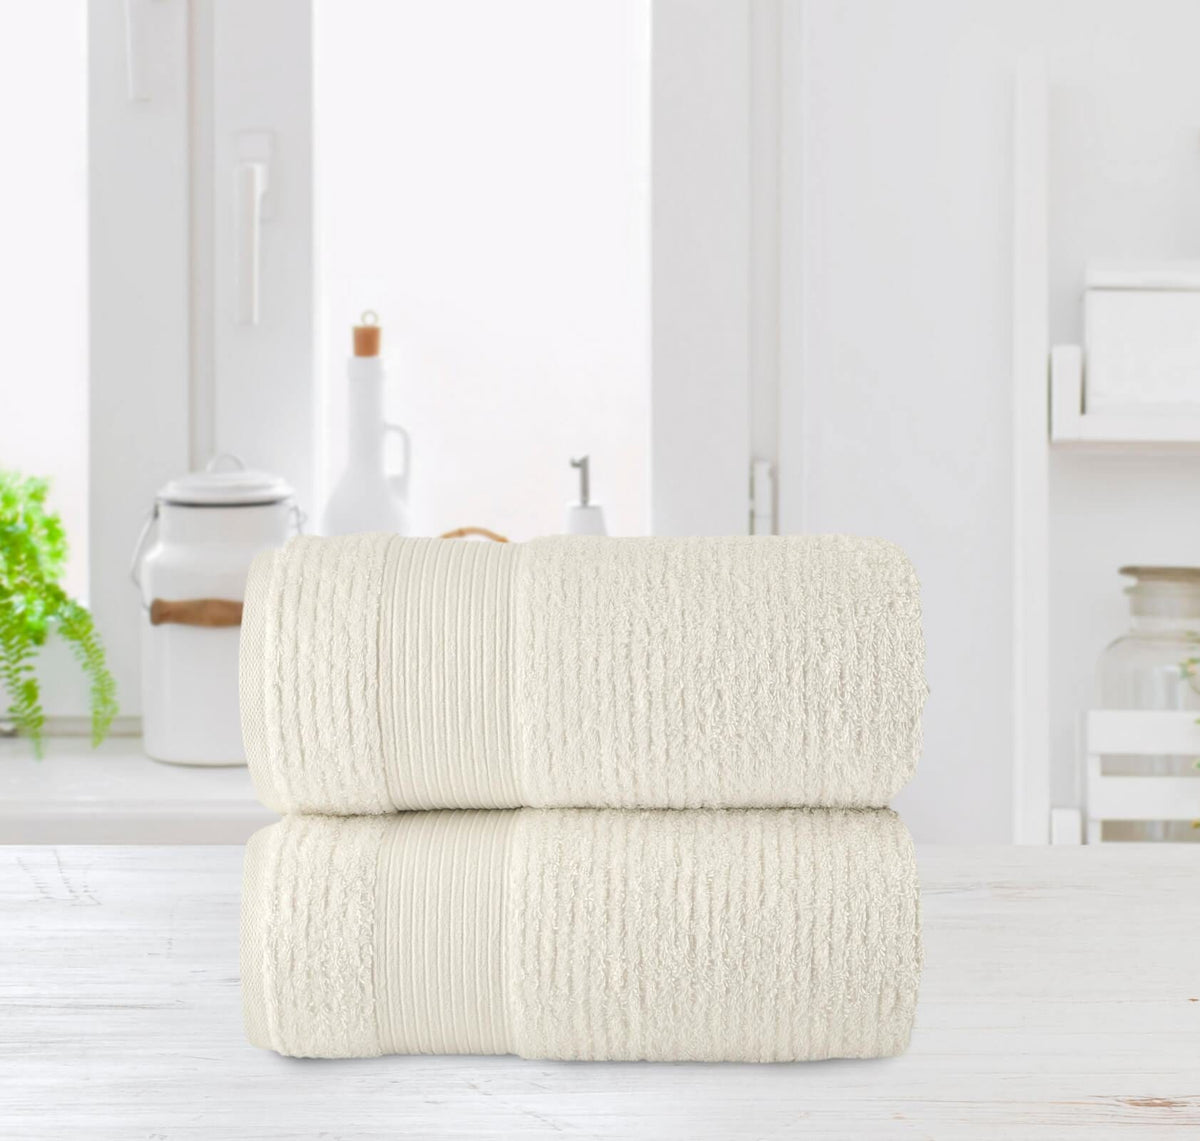 Chic Home Jacquard Turkish Cotton Bath Sheet Towel 2 Piece Set-Beige